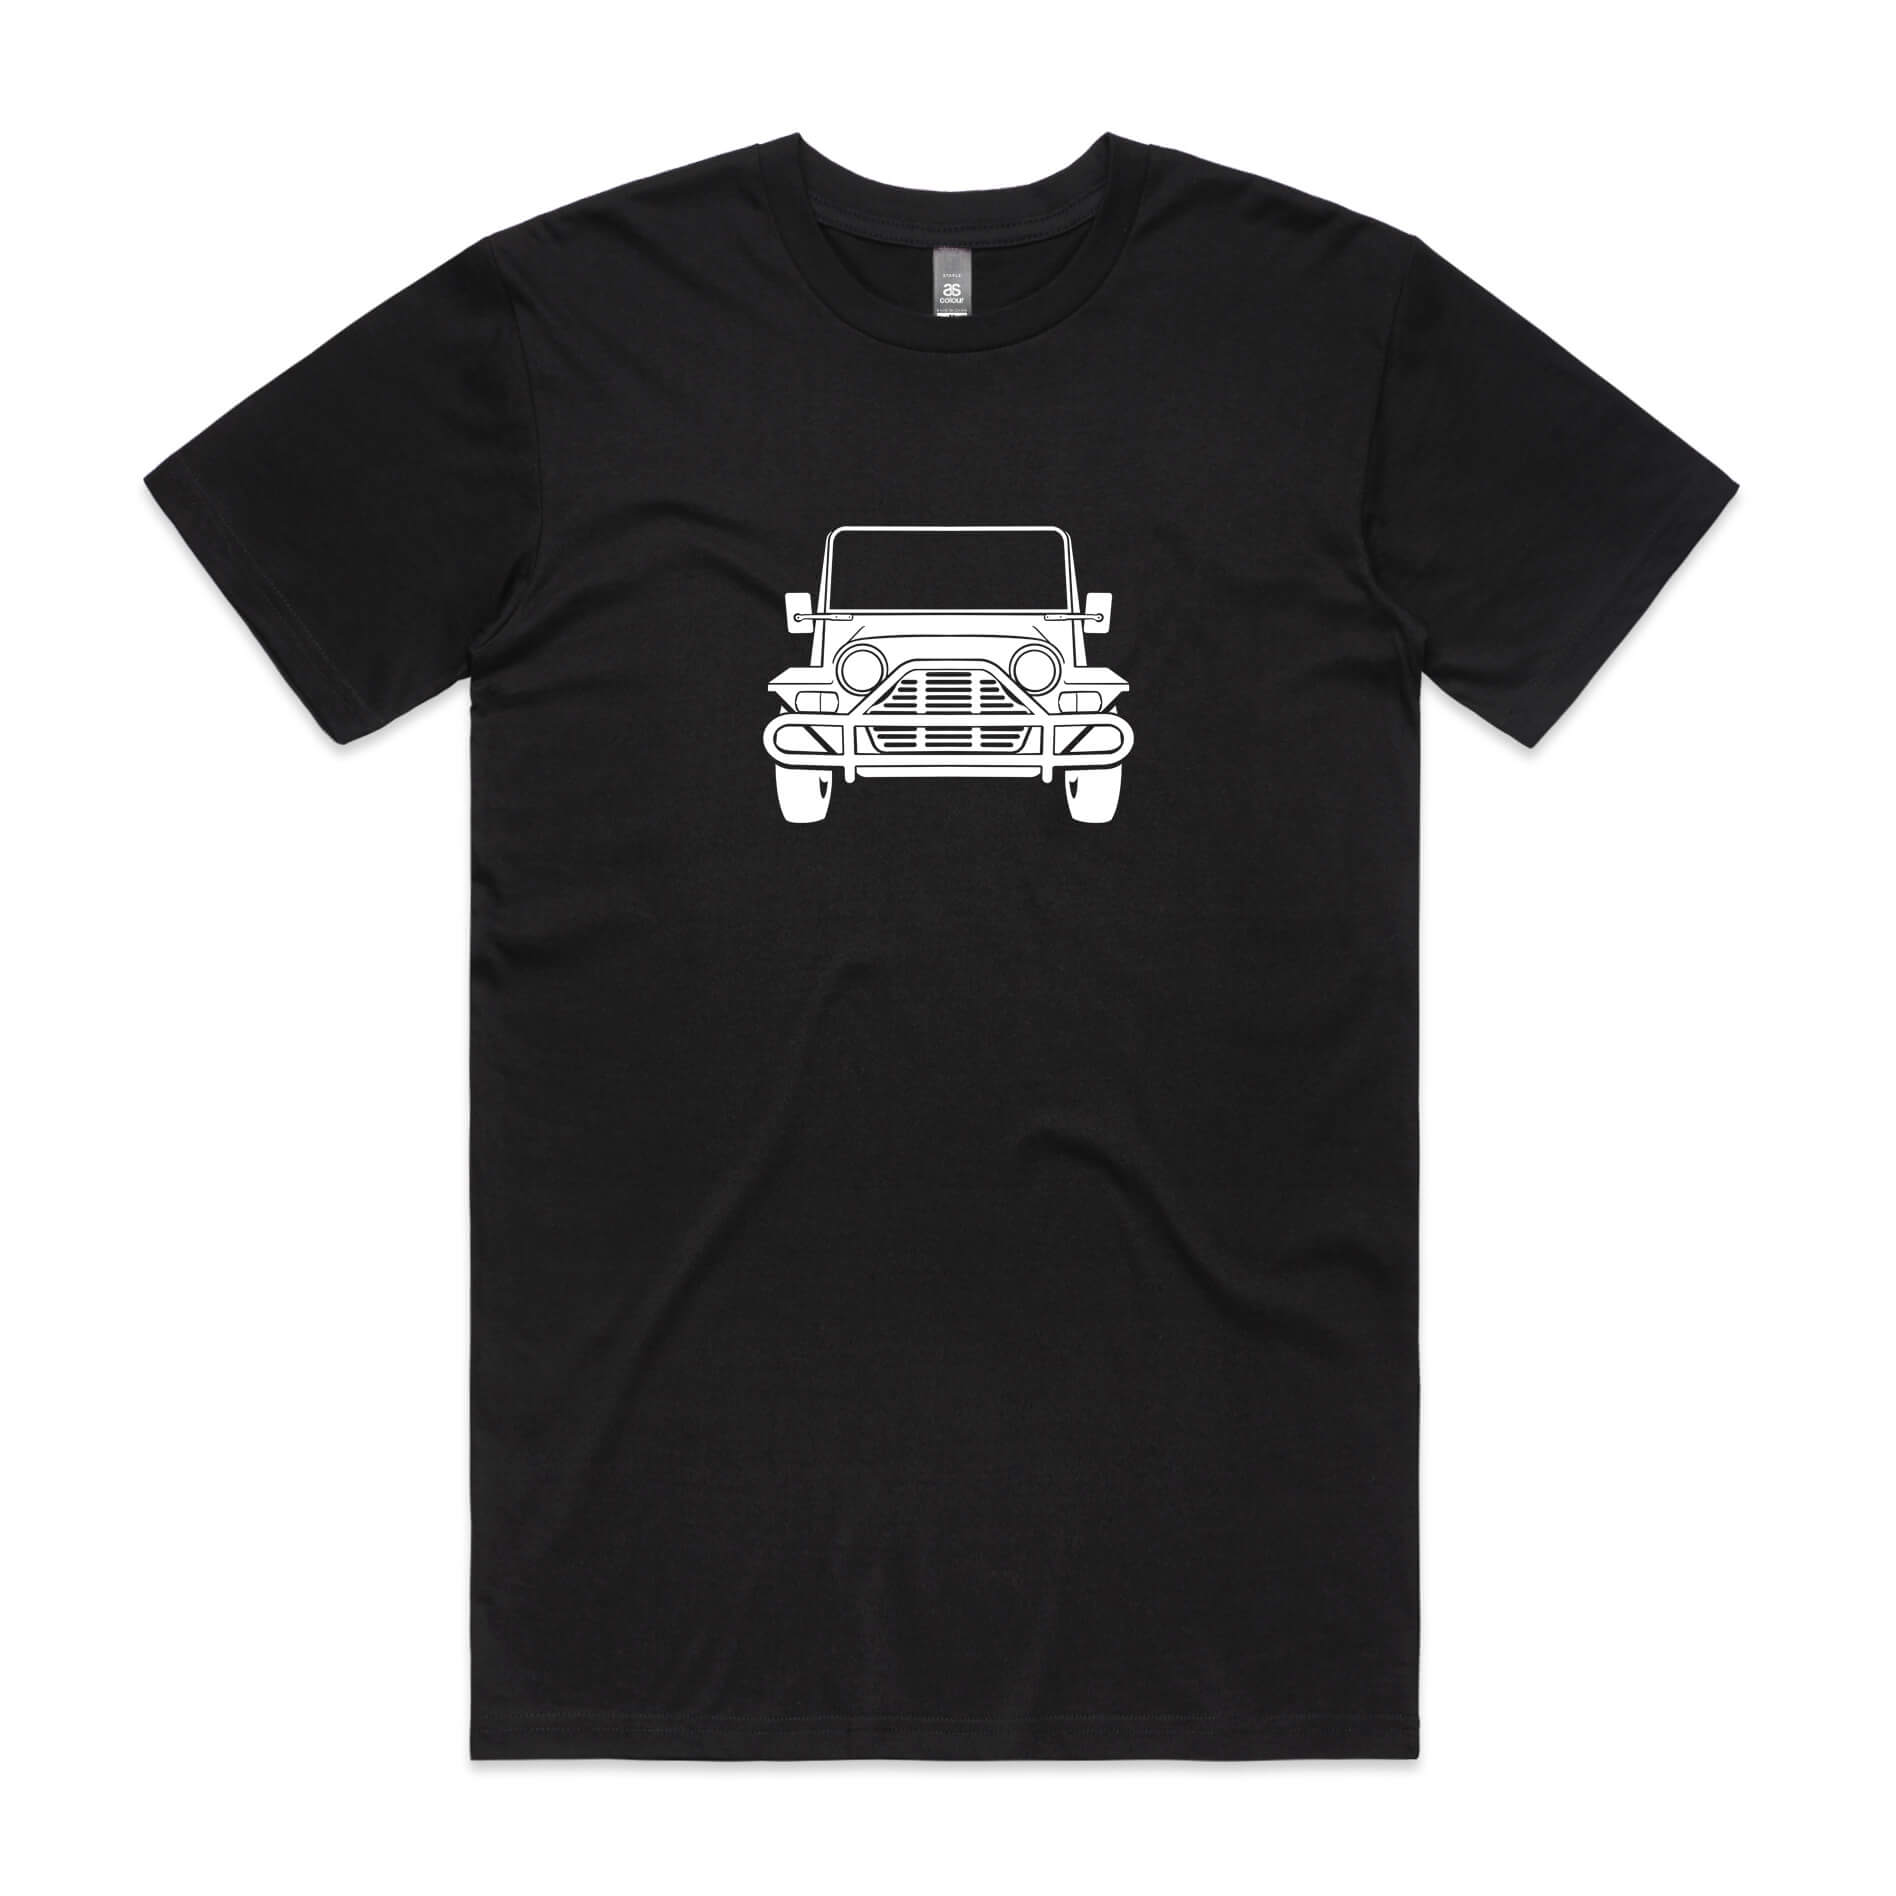 Mini Moke t-shirt in black